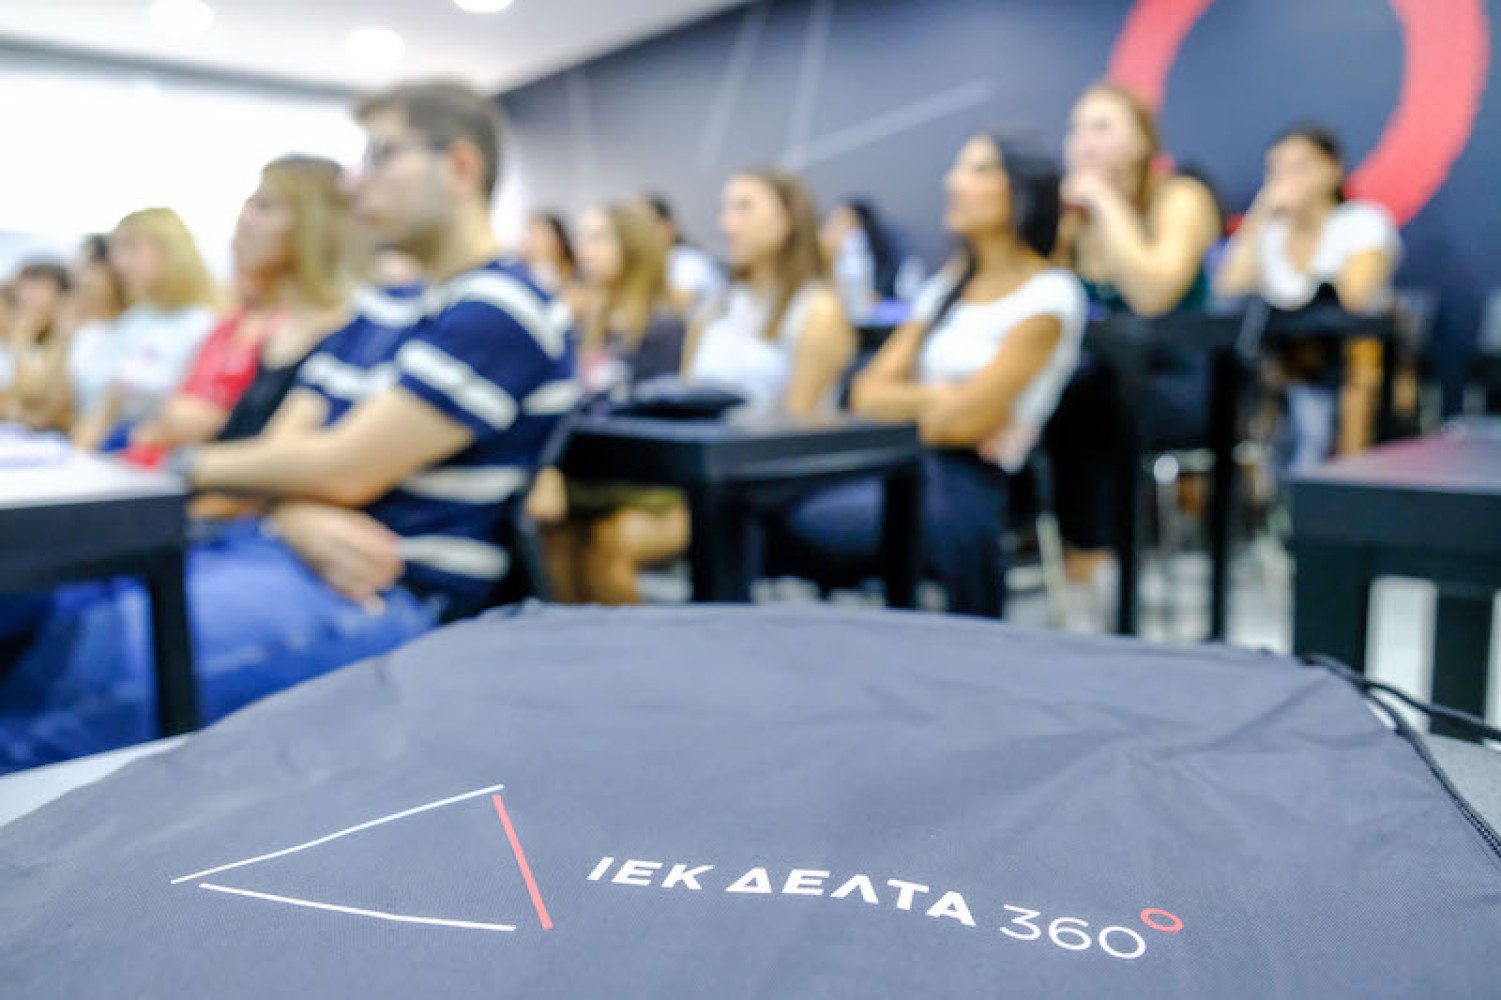 Welcome Days ΙΕΚ ΔΕΛΤΑ 360 - Δυναμική υποδοχή σπουδαστών σε Θεσσαλονίκη, Ιωάννινα, Πάτρα, Καλαμάτα και Χανιά Κρήτης!